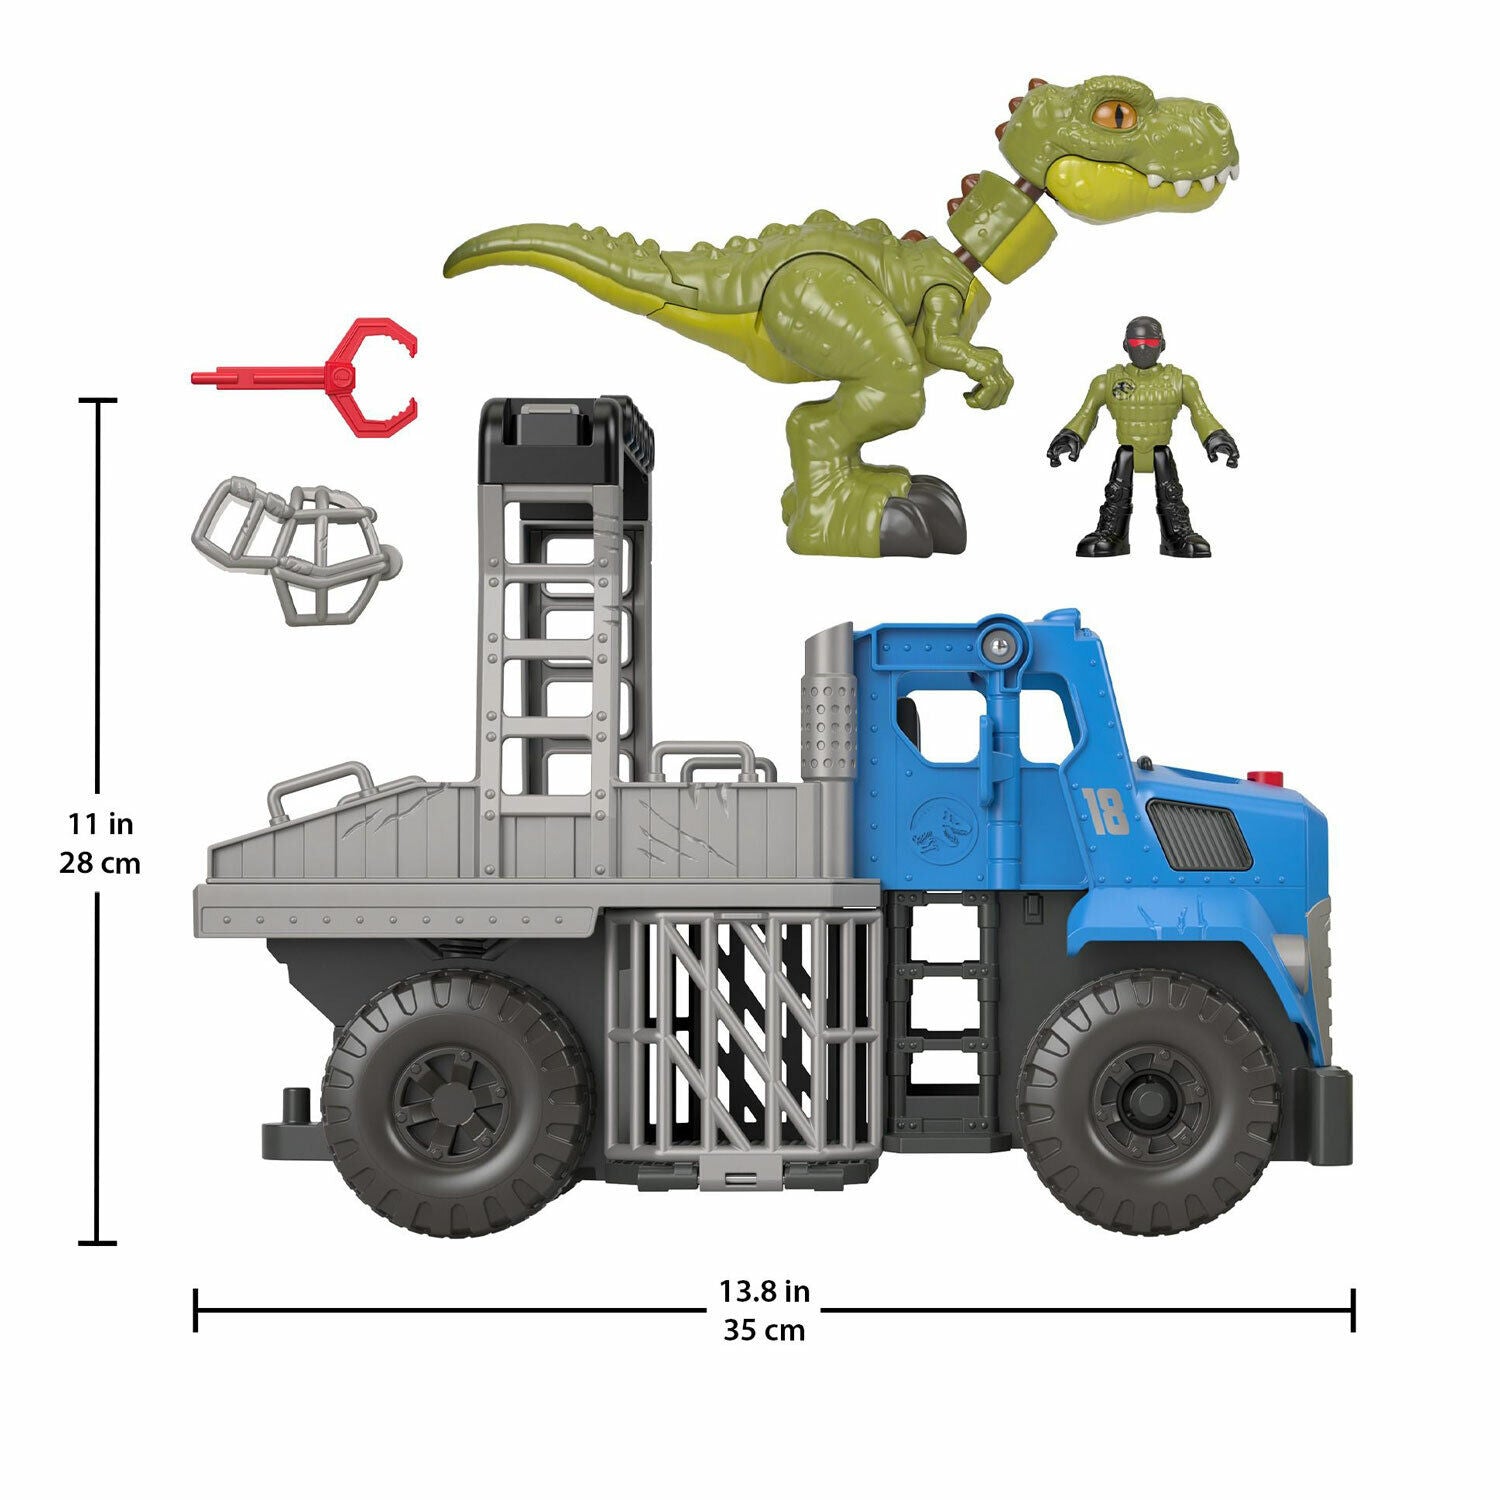 New Imaginext Jurassic World Dominion Break Out Dino Hauler Toy Set